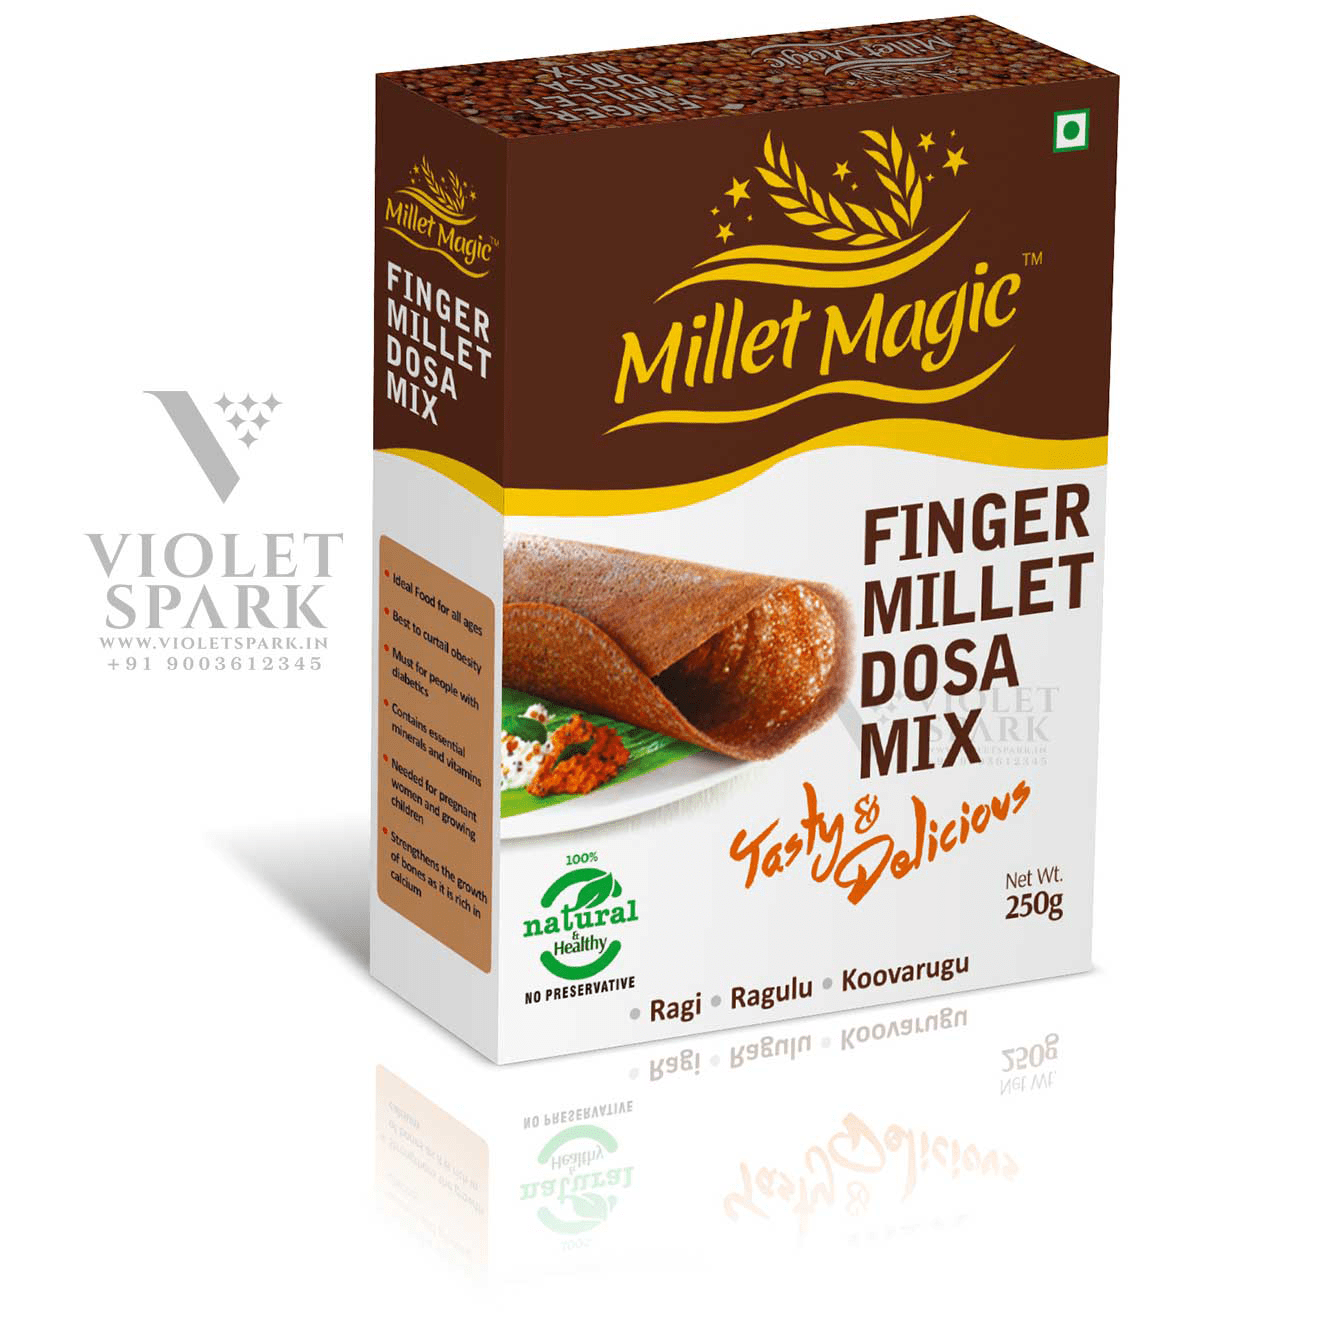 Millet Magic Finger Millet Dosa Mix Graphic Design, Branding Packaging Design in Rasipuram by Creative Prints thecreativeprints